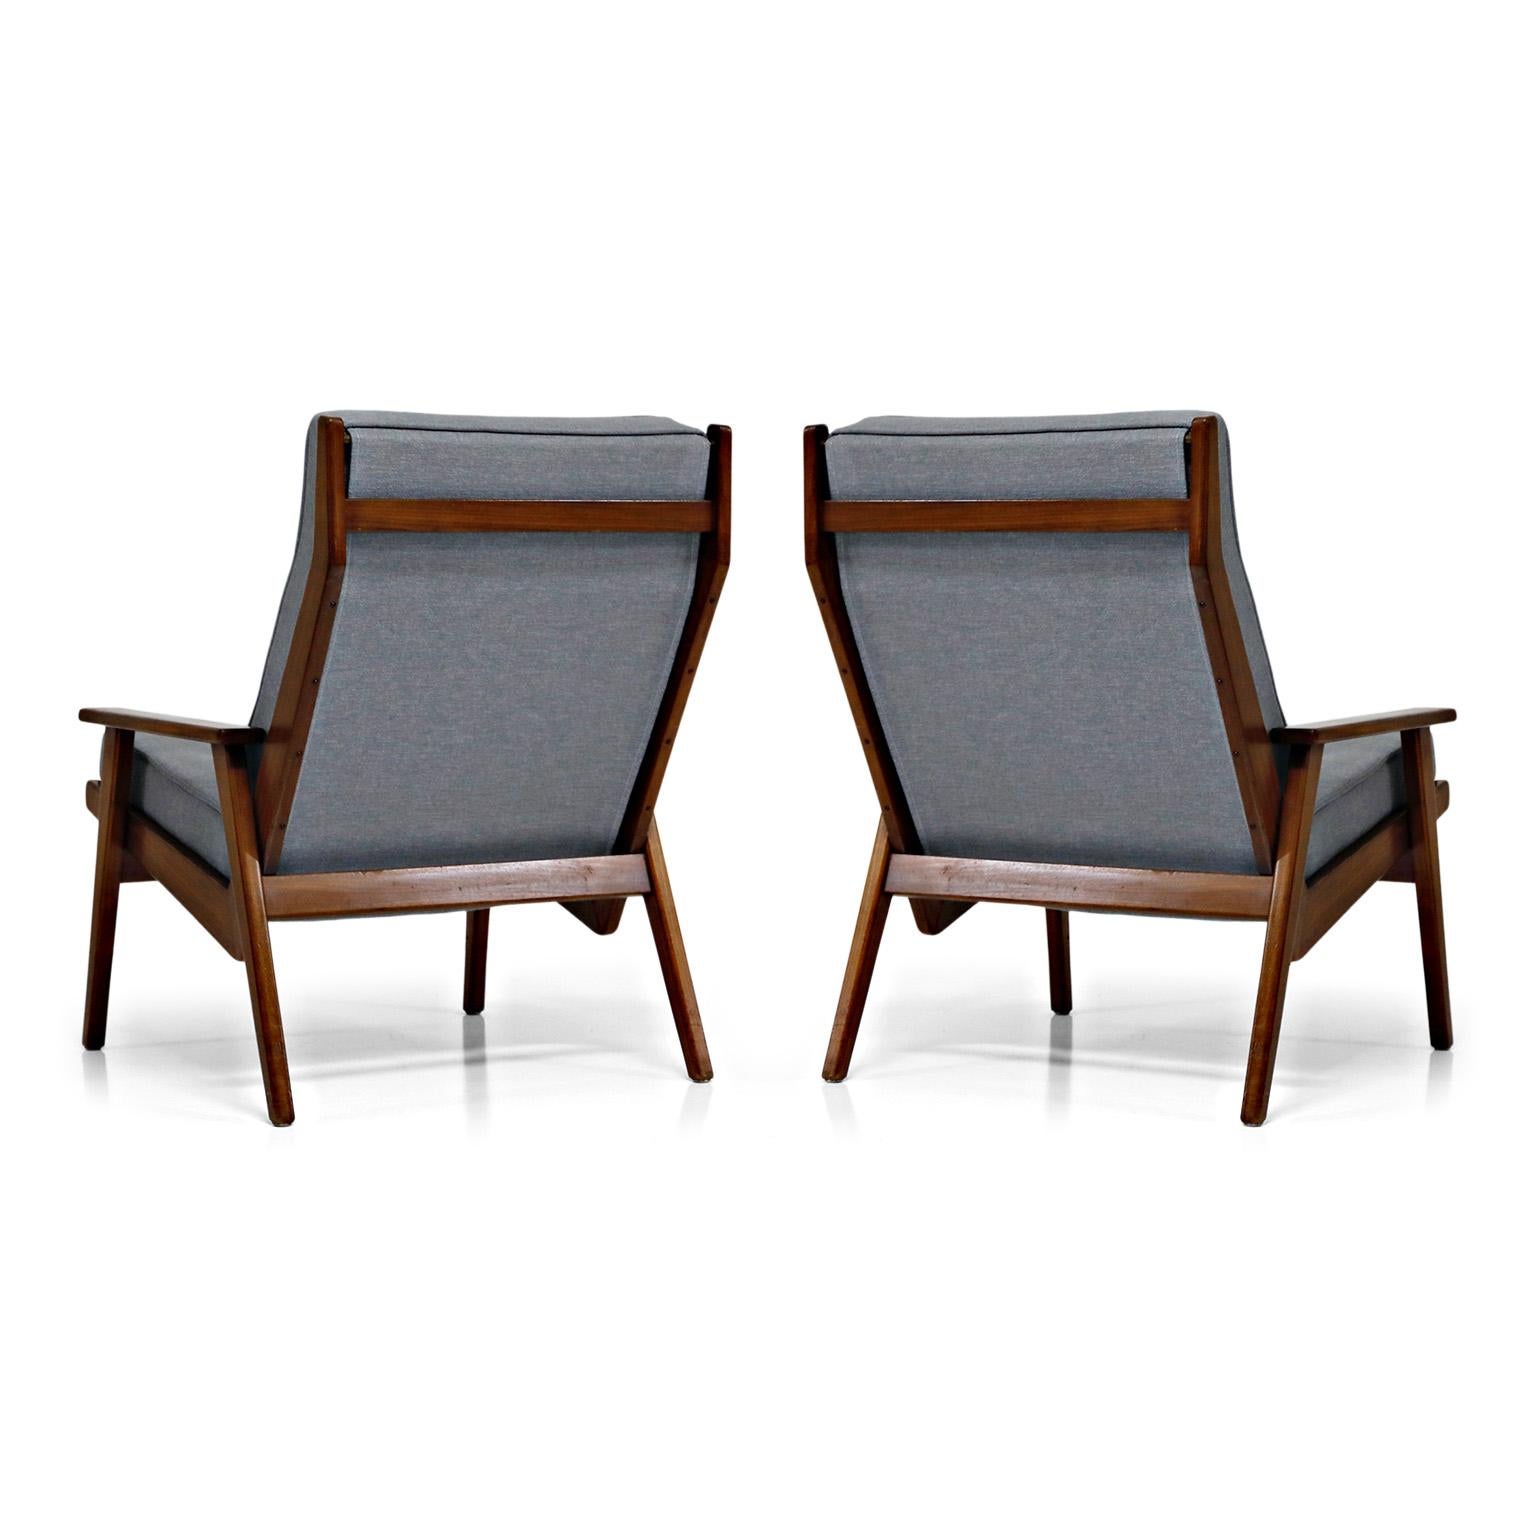 Pair of Lotus Chairs by Robert Parry for Gelderland, Denmark 1950s, Restored 1